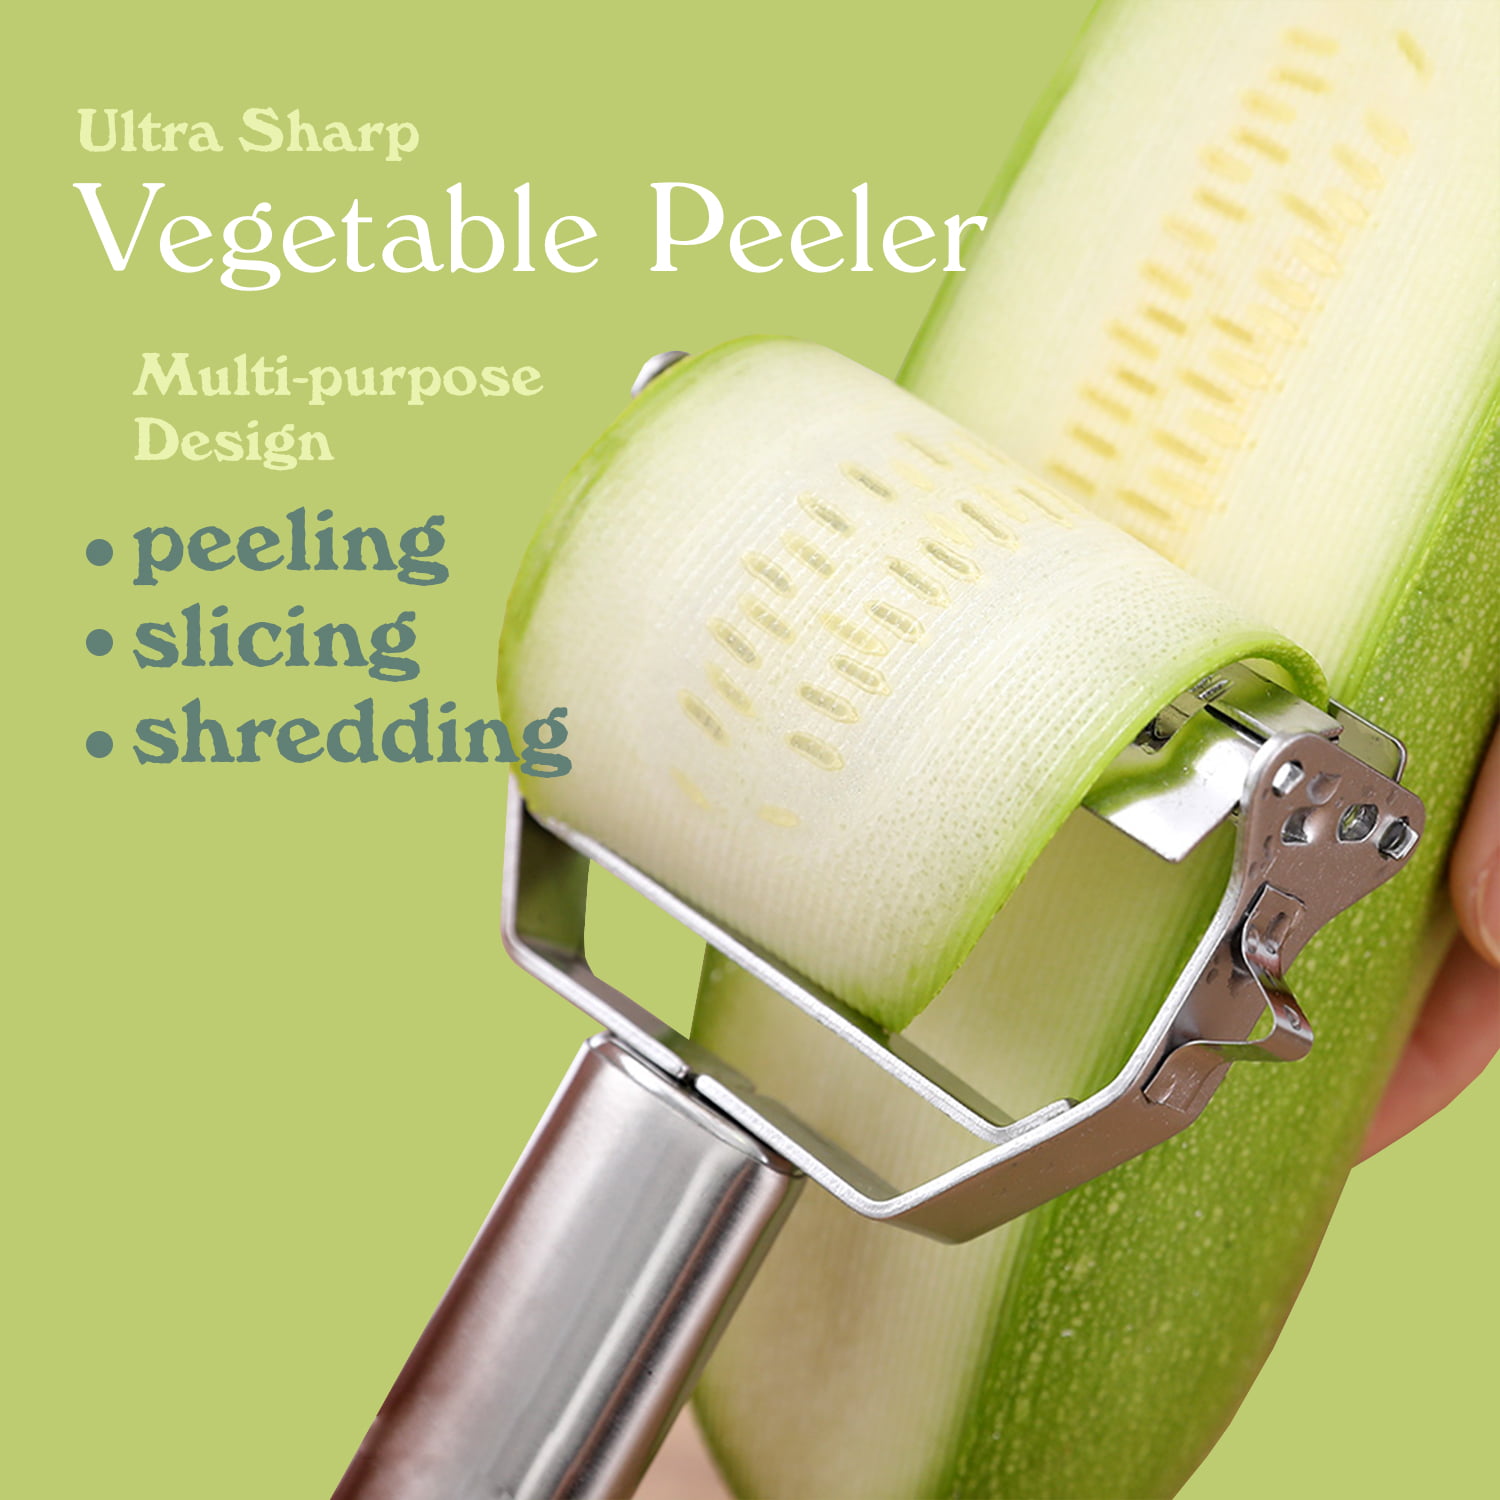 Myron Stainless Steel Vegetable Peeler - Commercial Grade Julienne Cutter -  Fruit, Potatoes, Carrot, Cucumber, Dishwasher Safe